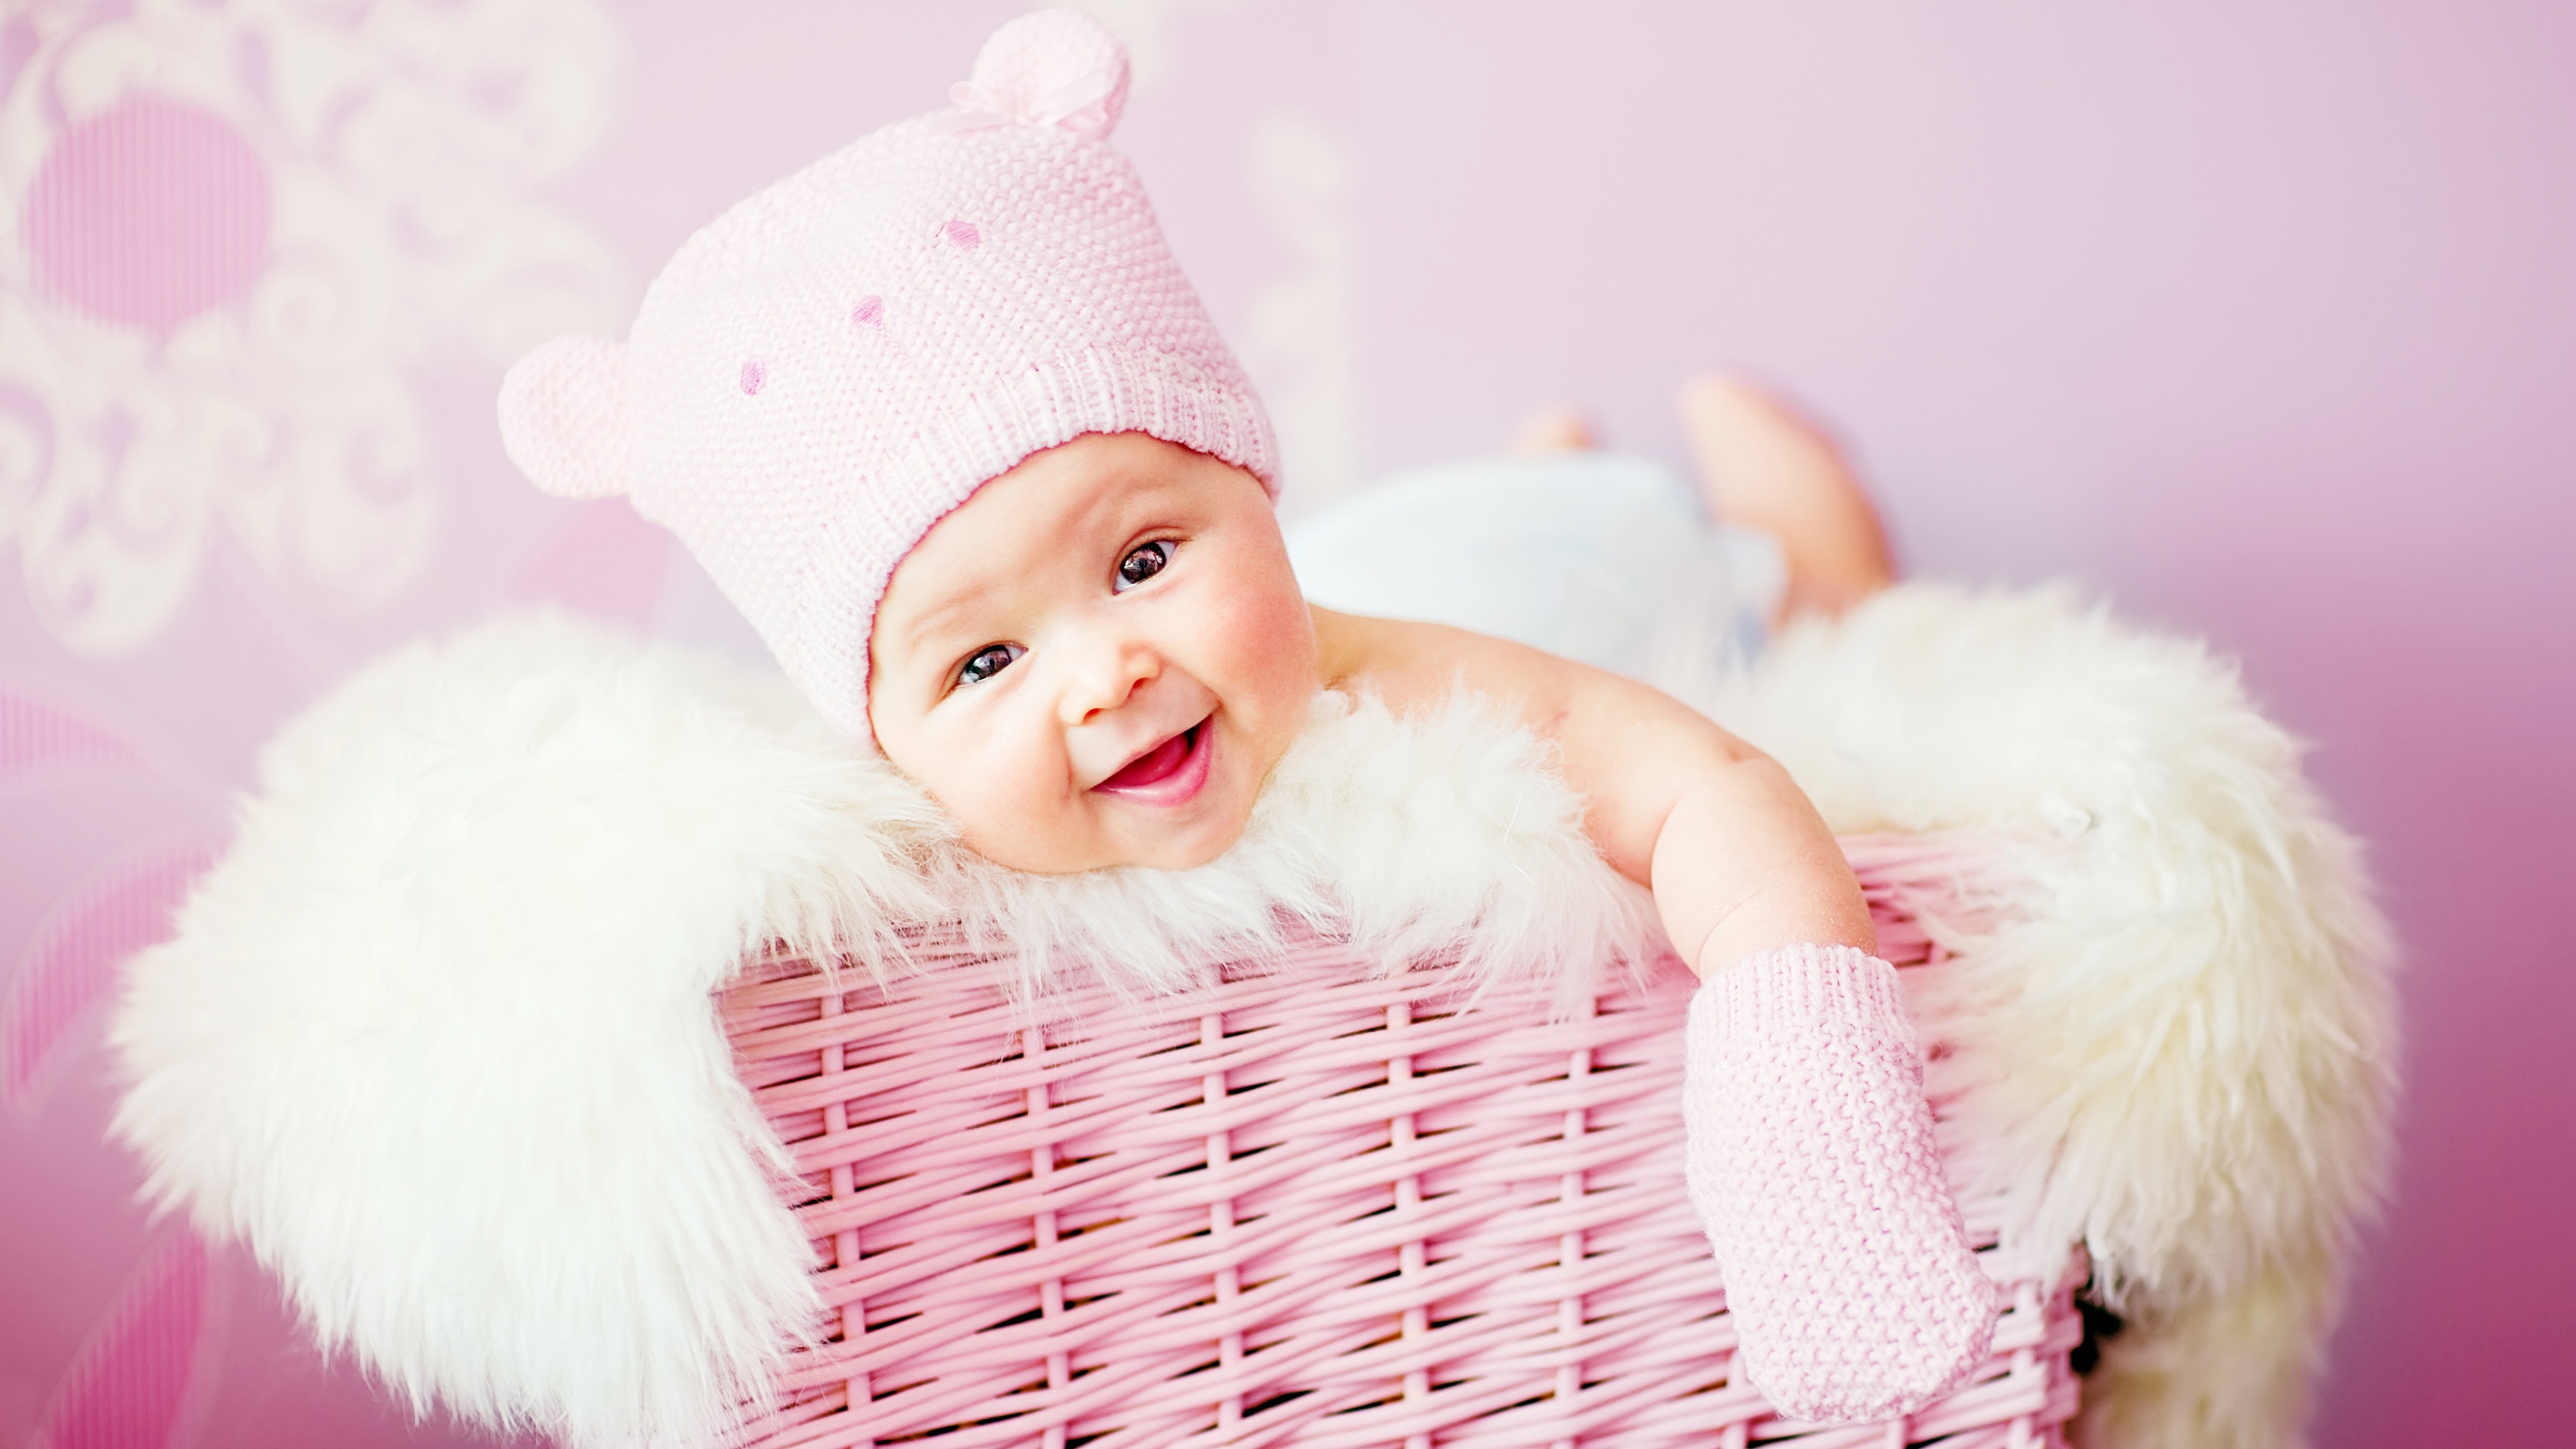 Girl Baby Images Hd - HD Wallpaper 